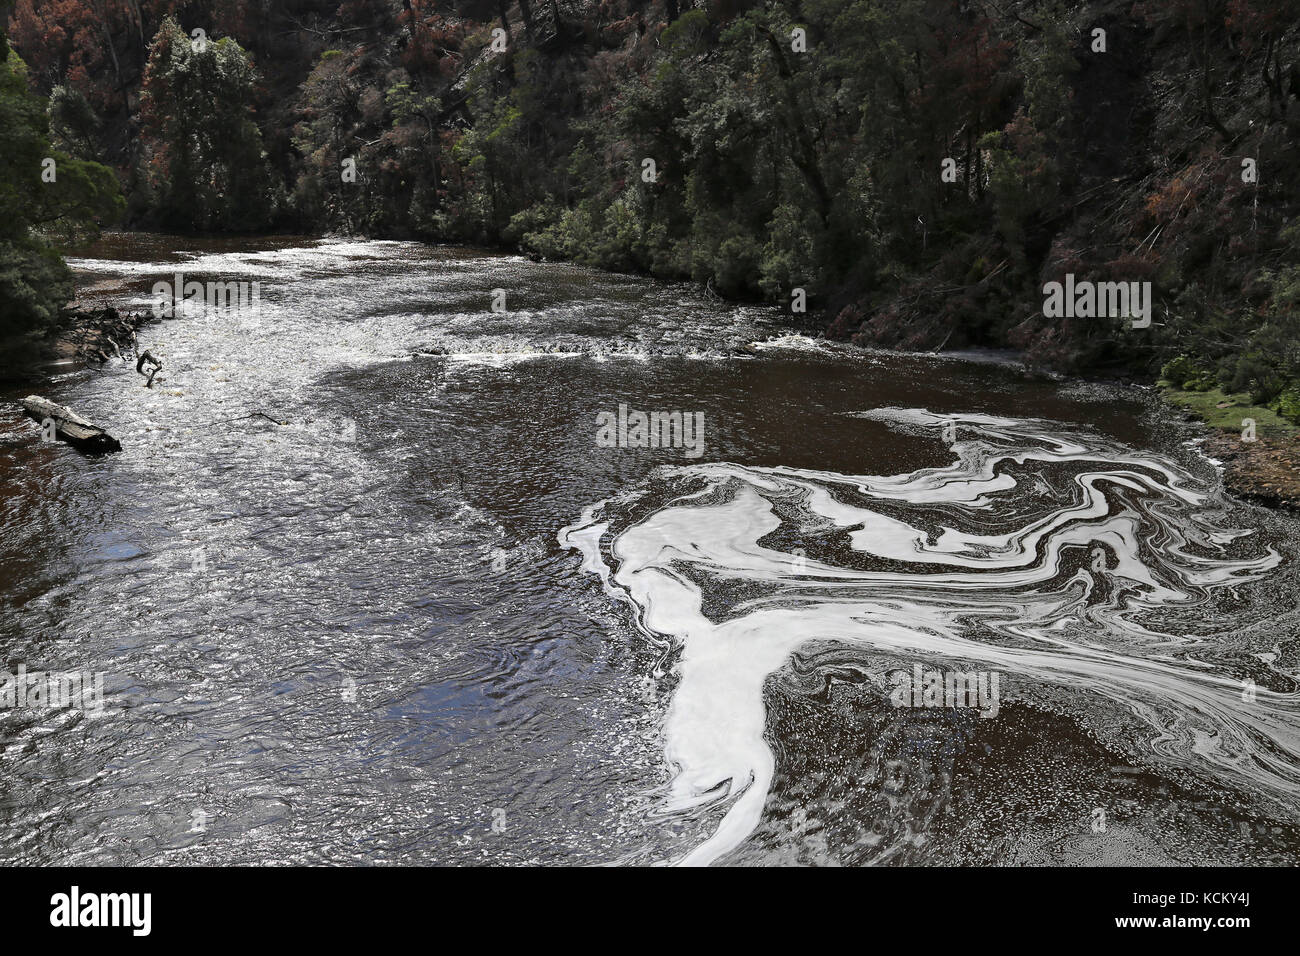 Arthur River flowing through temperate rainforest. Tarkine region, northwest Tasmania, Australia Stock Photo